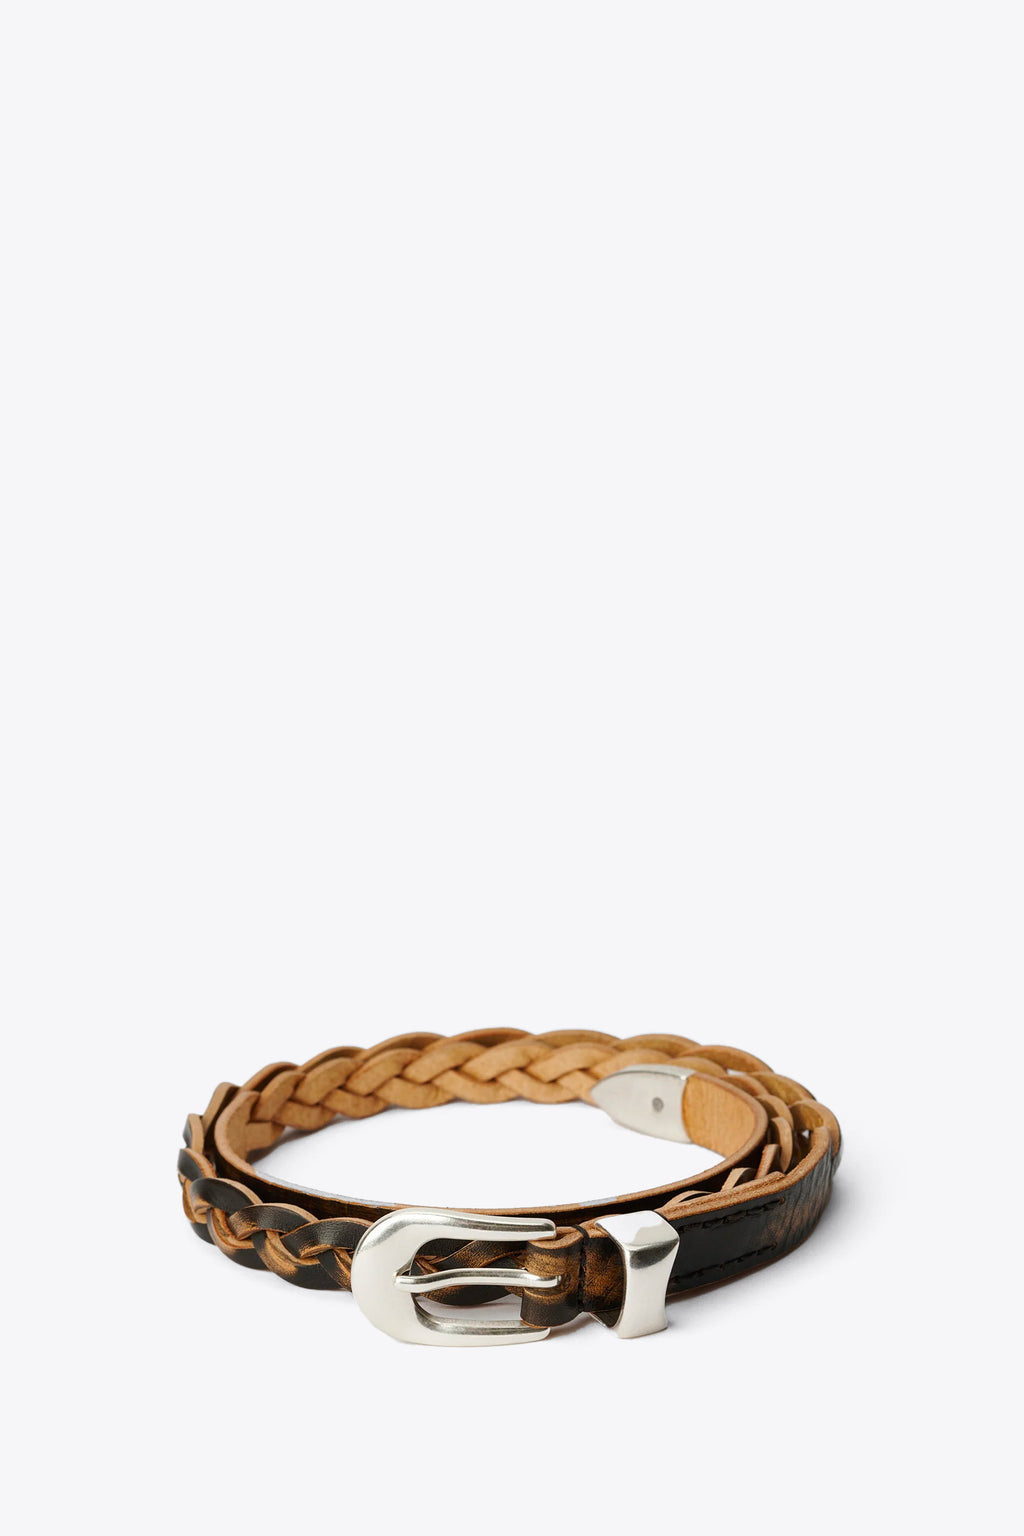 alt-image__Vintage-black-braided-leather-belt---2-cm-Braided-Belt